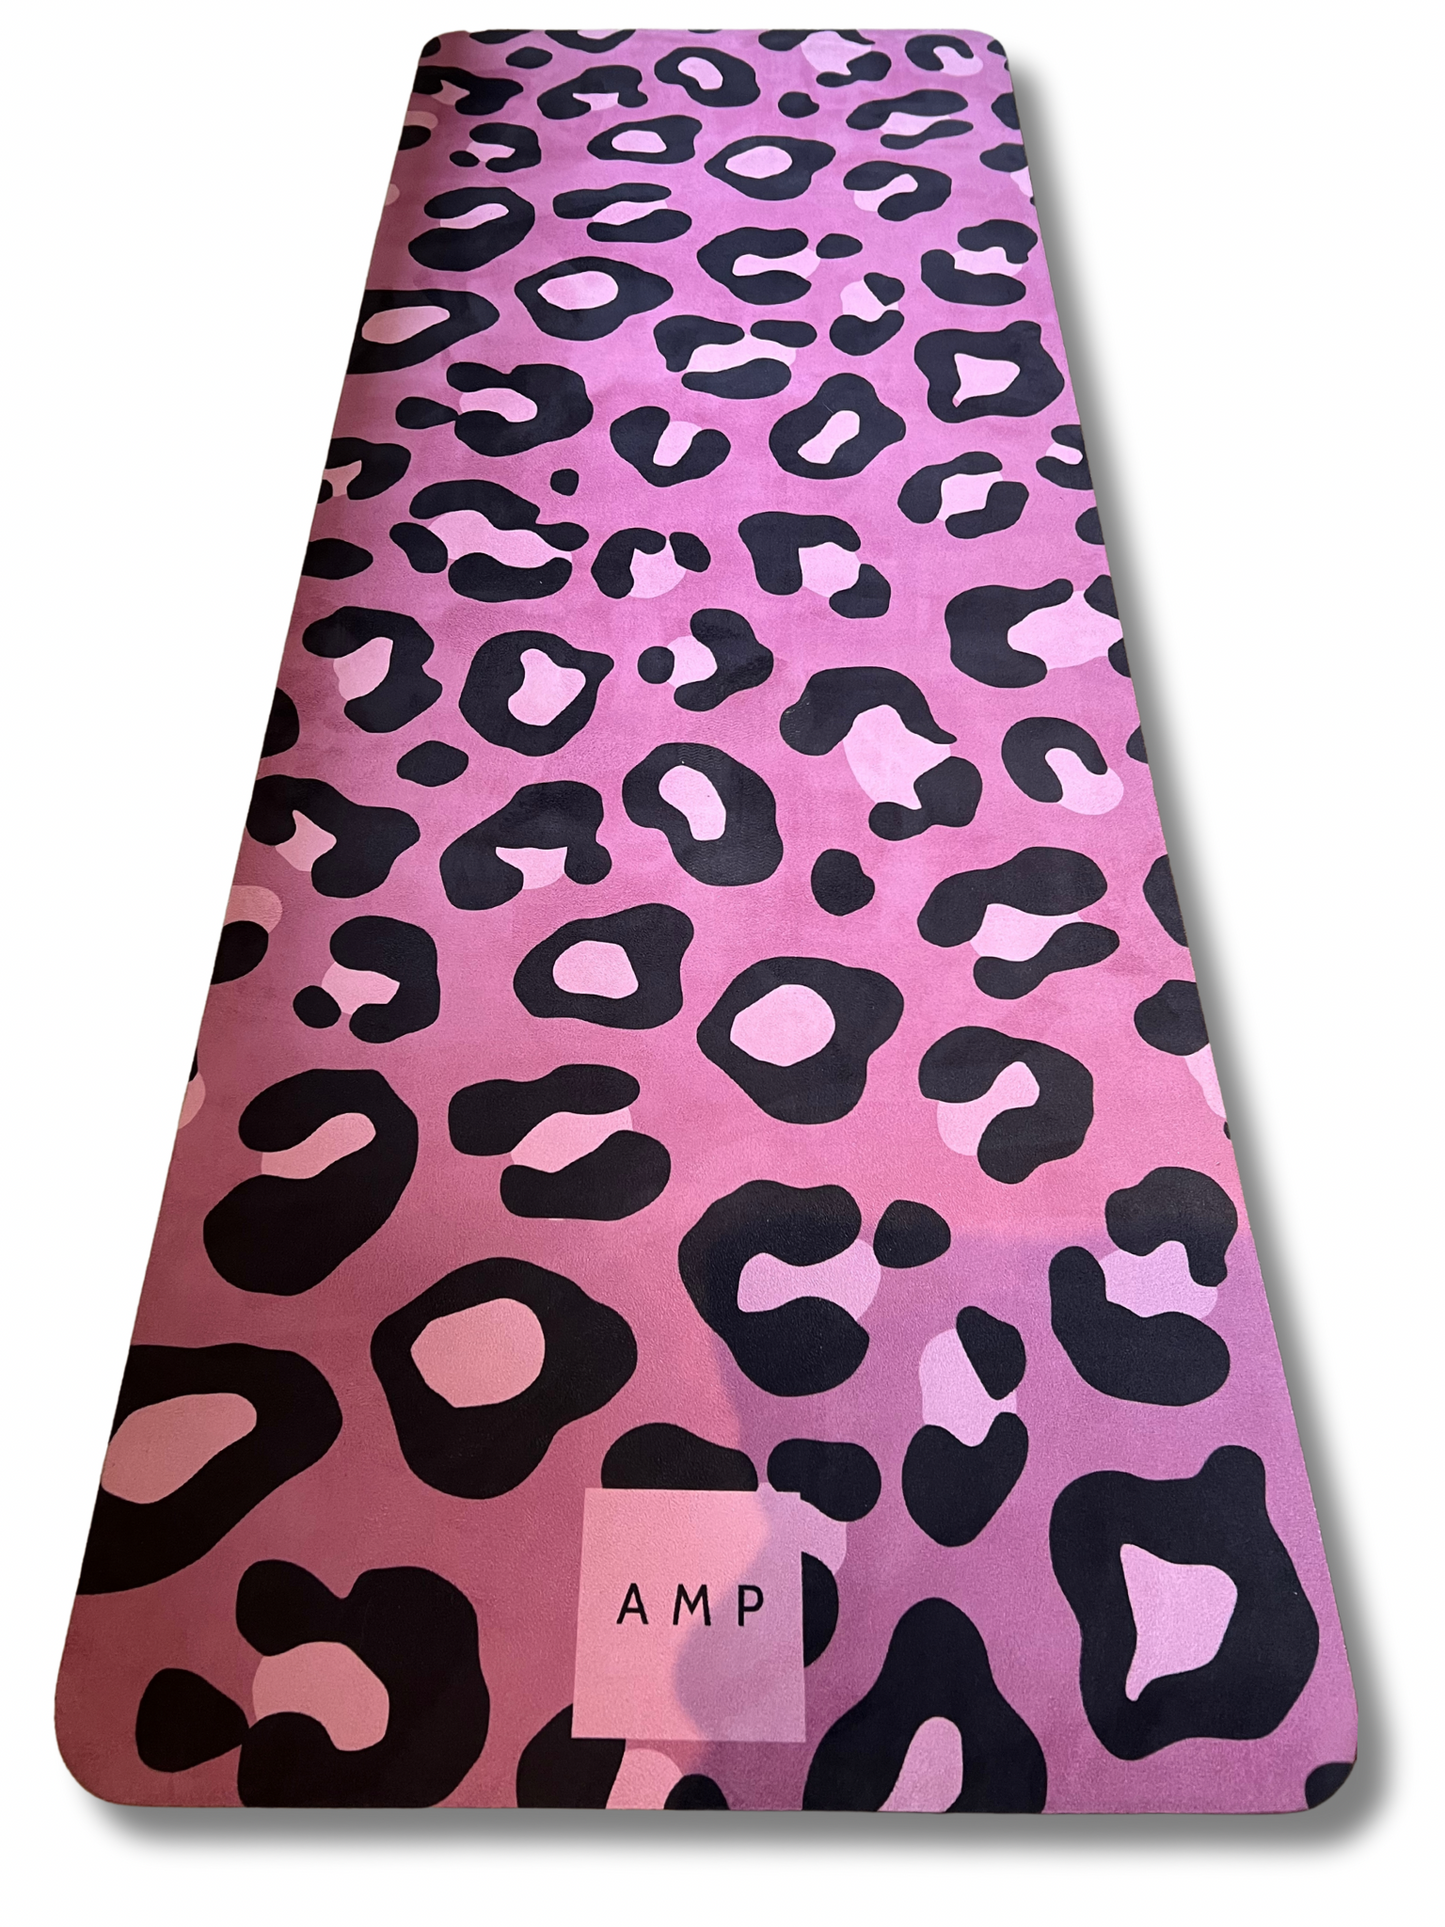 Amp yoga mat microfibre fitness Pilates natural rubber leopard print 